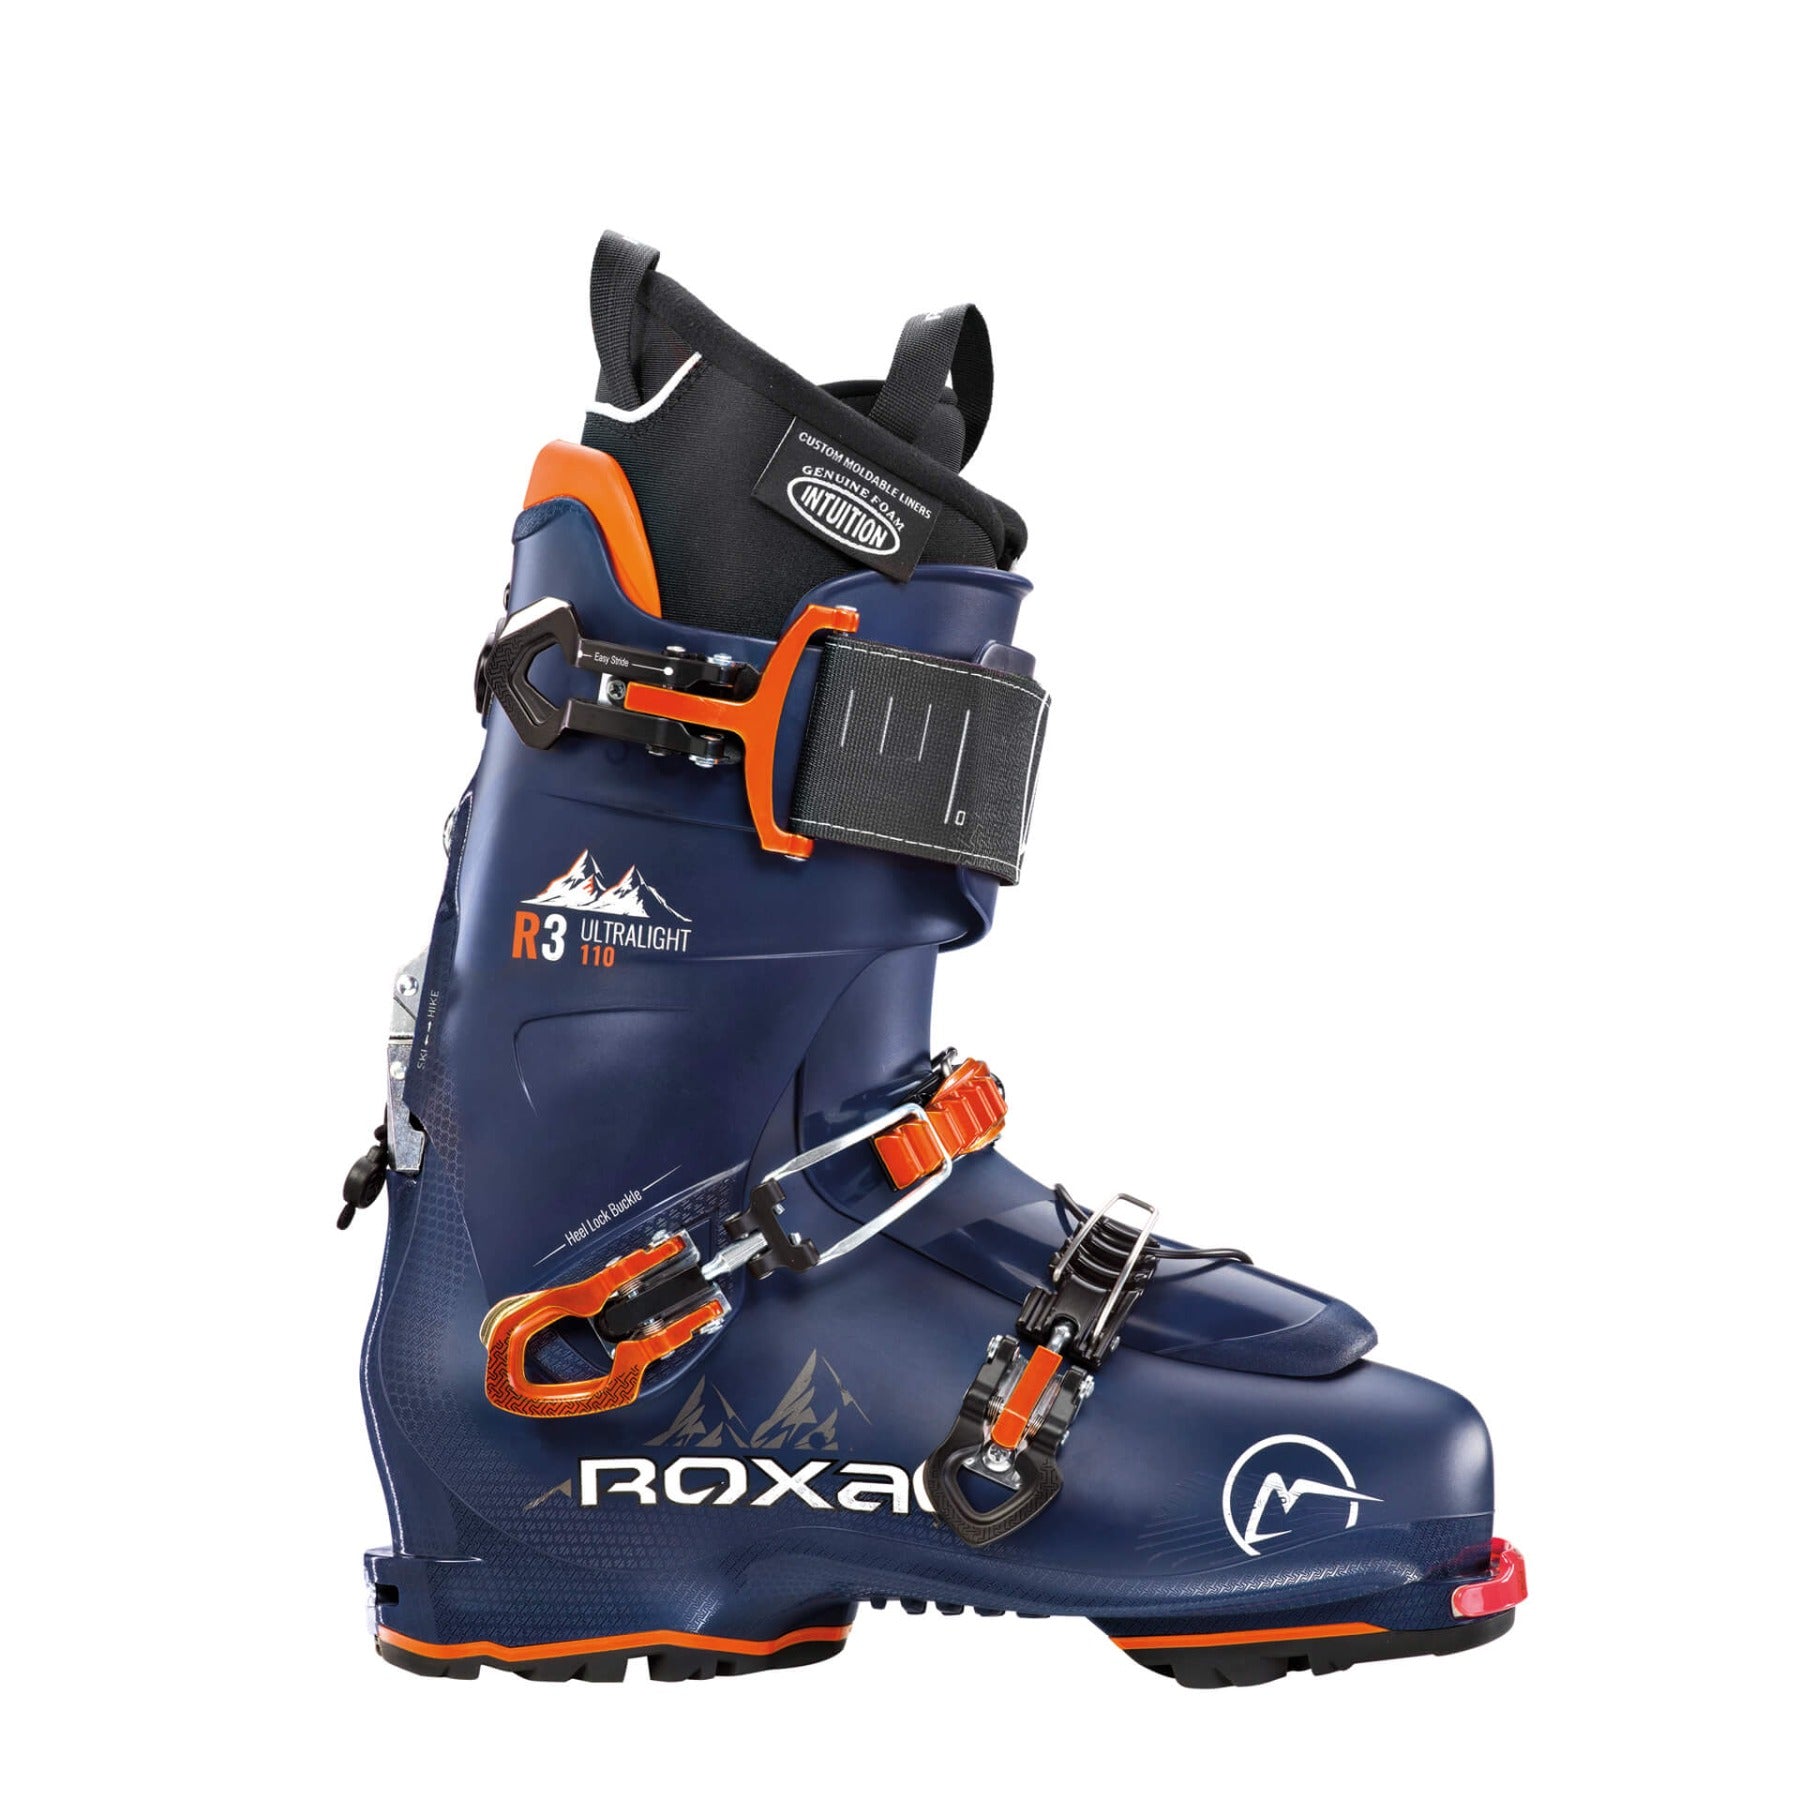 Roxa R3 110 T.I. I.R. Ski Boots